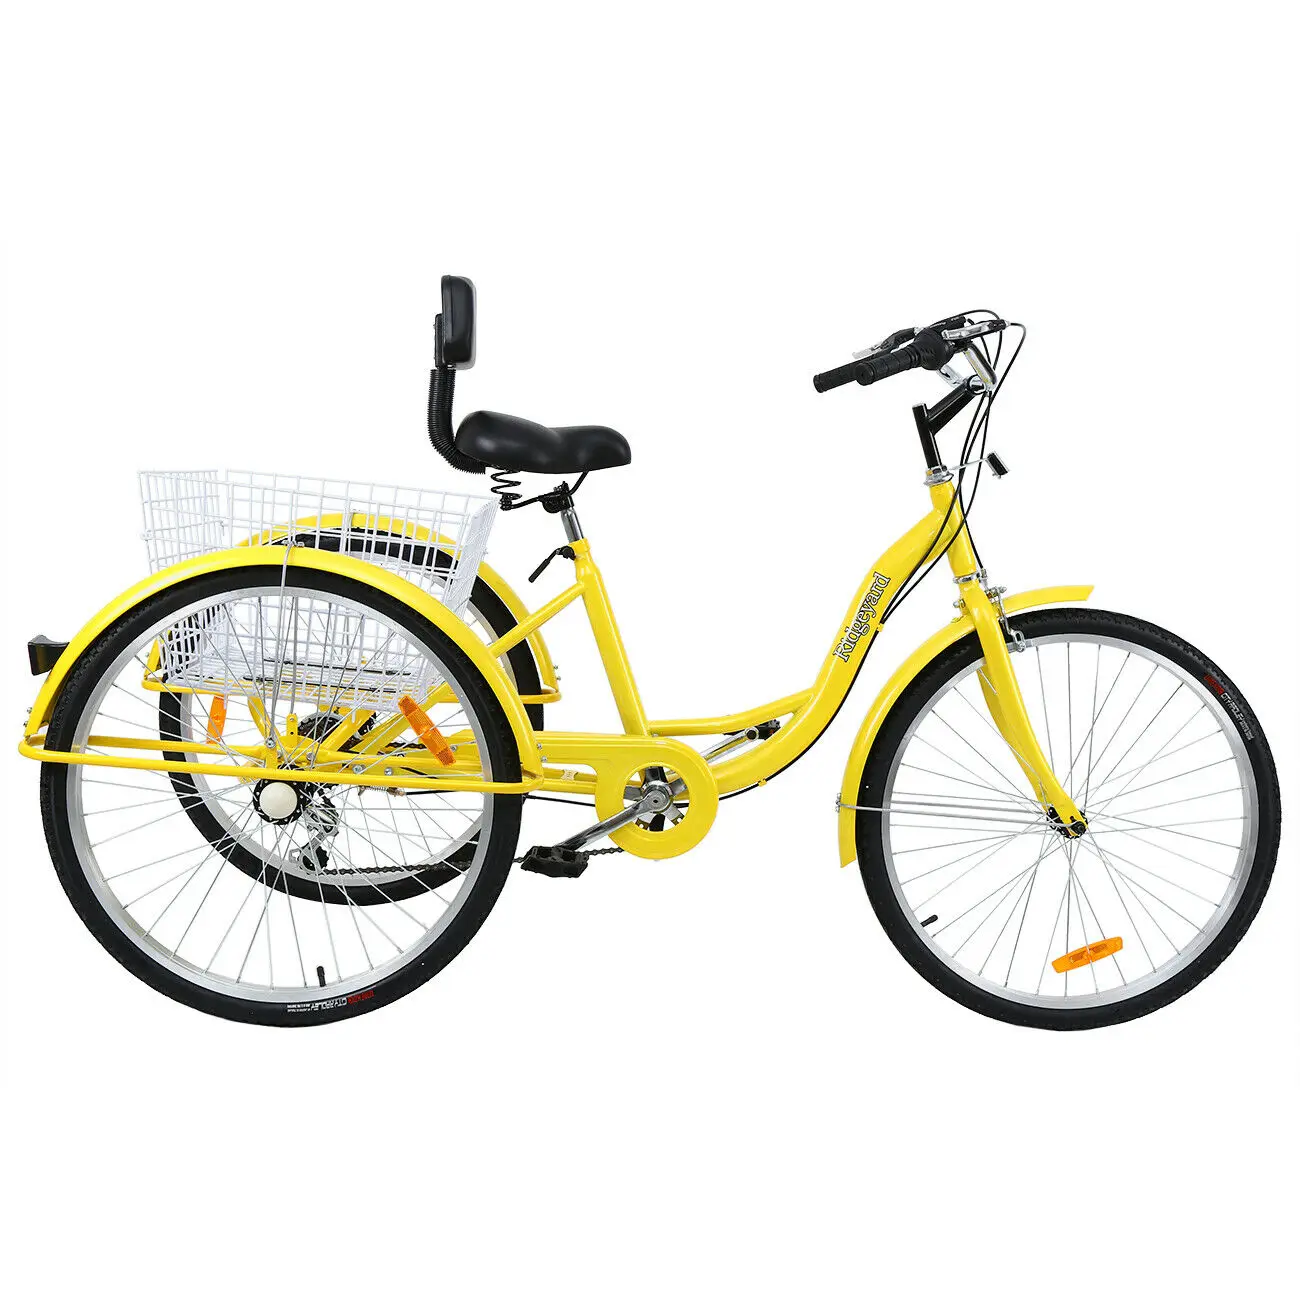 Ridgeyard 26" 7-Speed Adult 3-Wheel Tricycle Trike Bicycle Bike Cruise Basket 